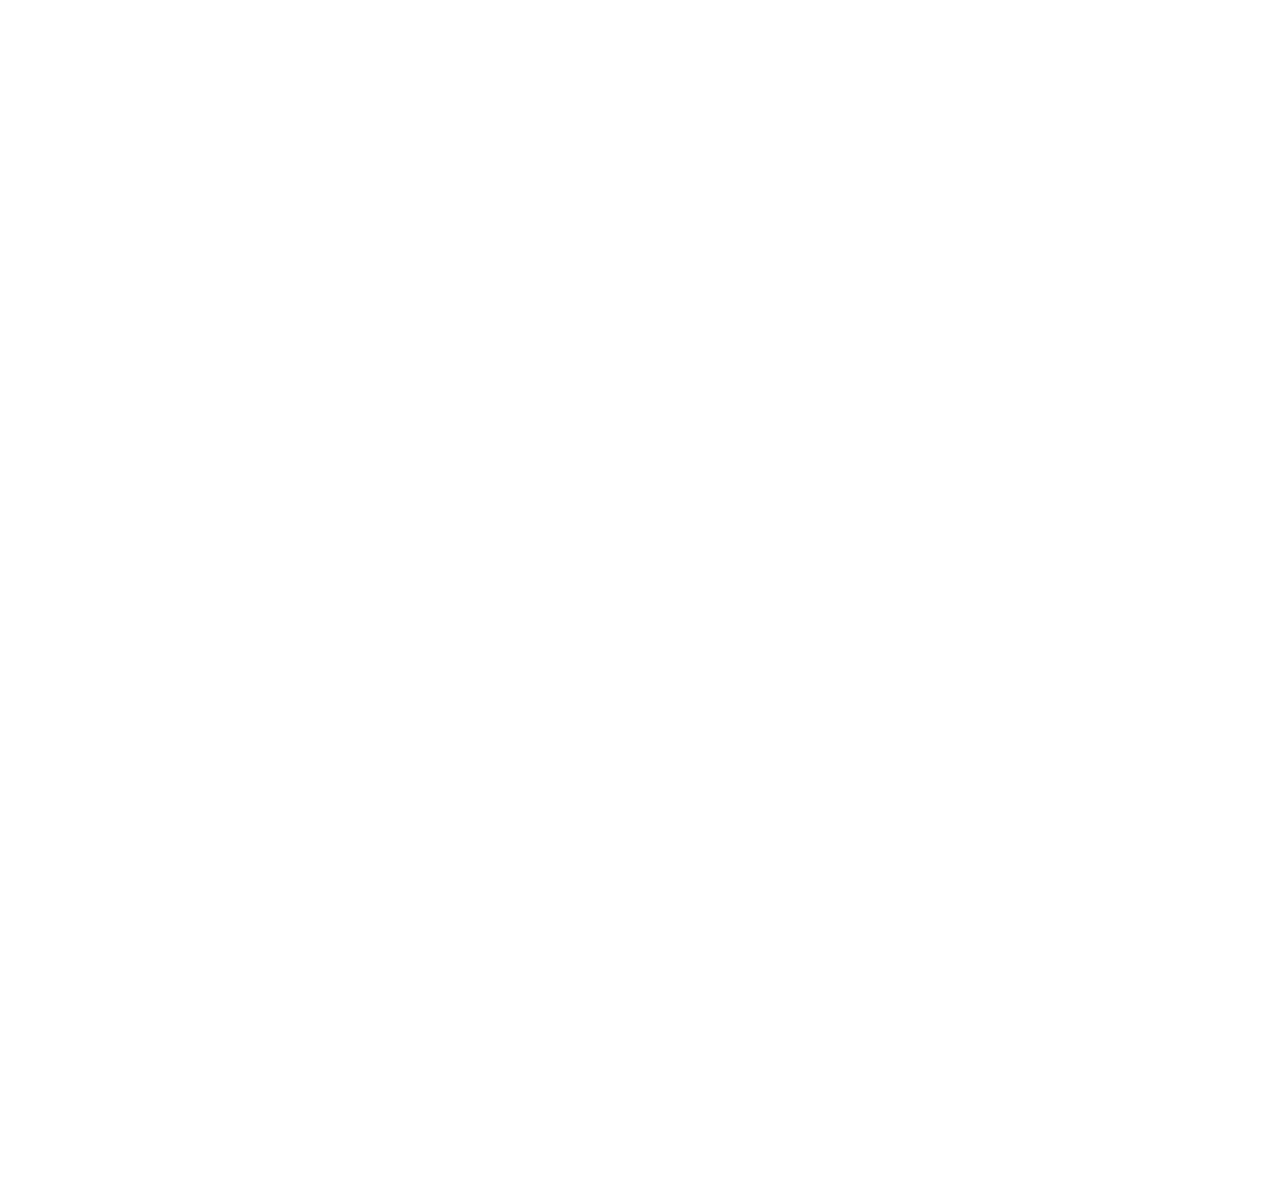 iPhoneから簡単投稿 シンプルで軽快なMovableType専用 投稿アプリ MTClip